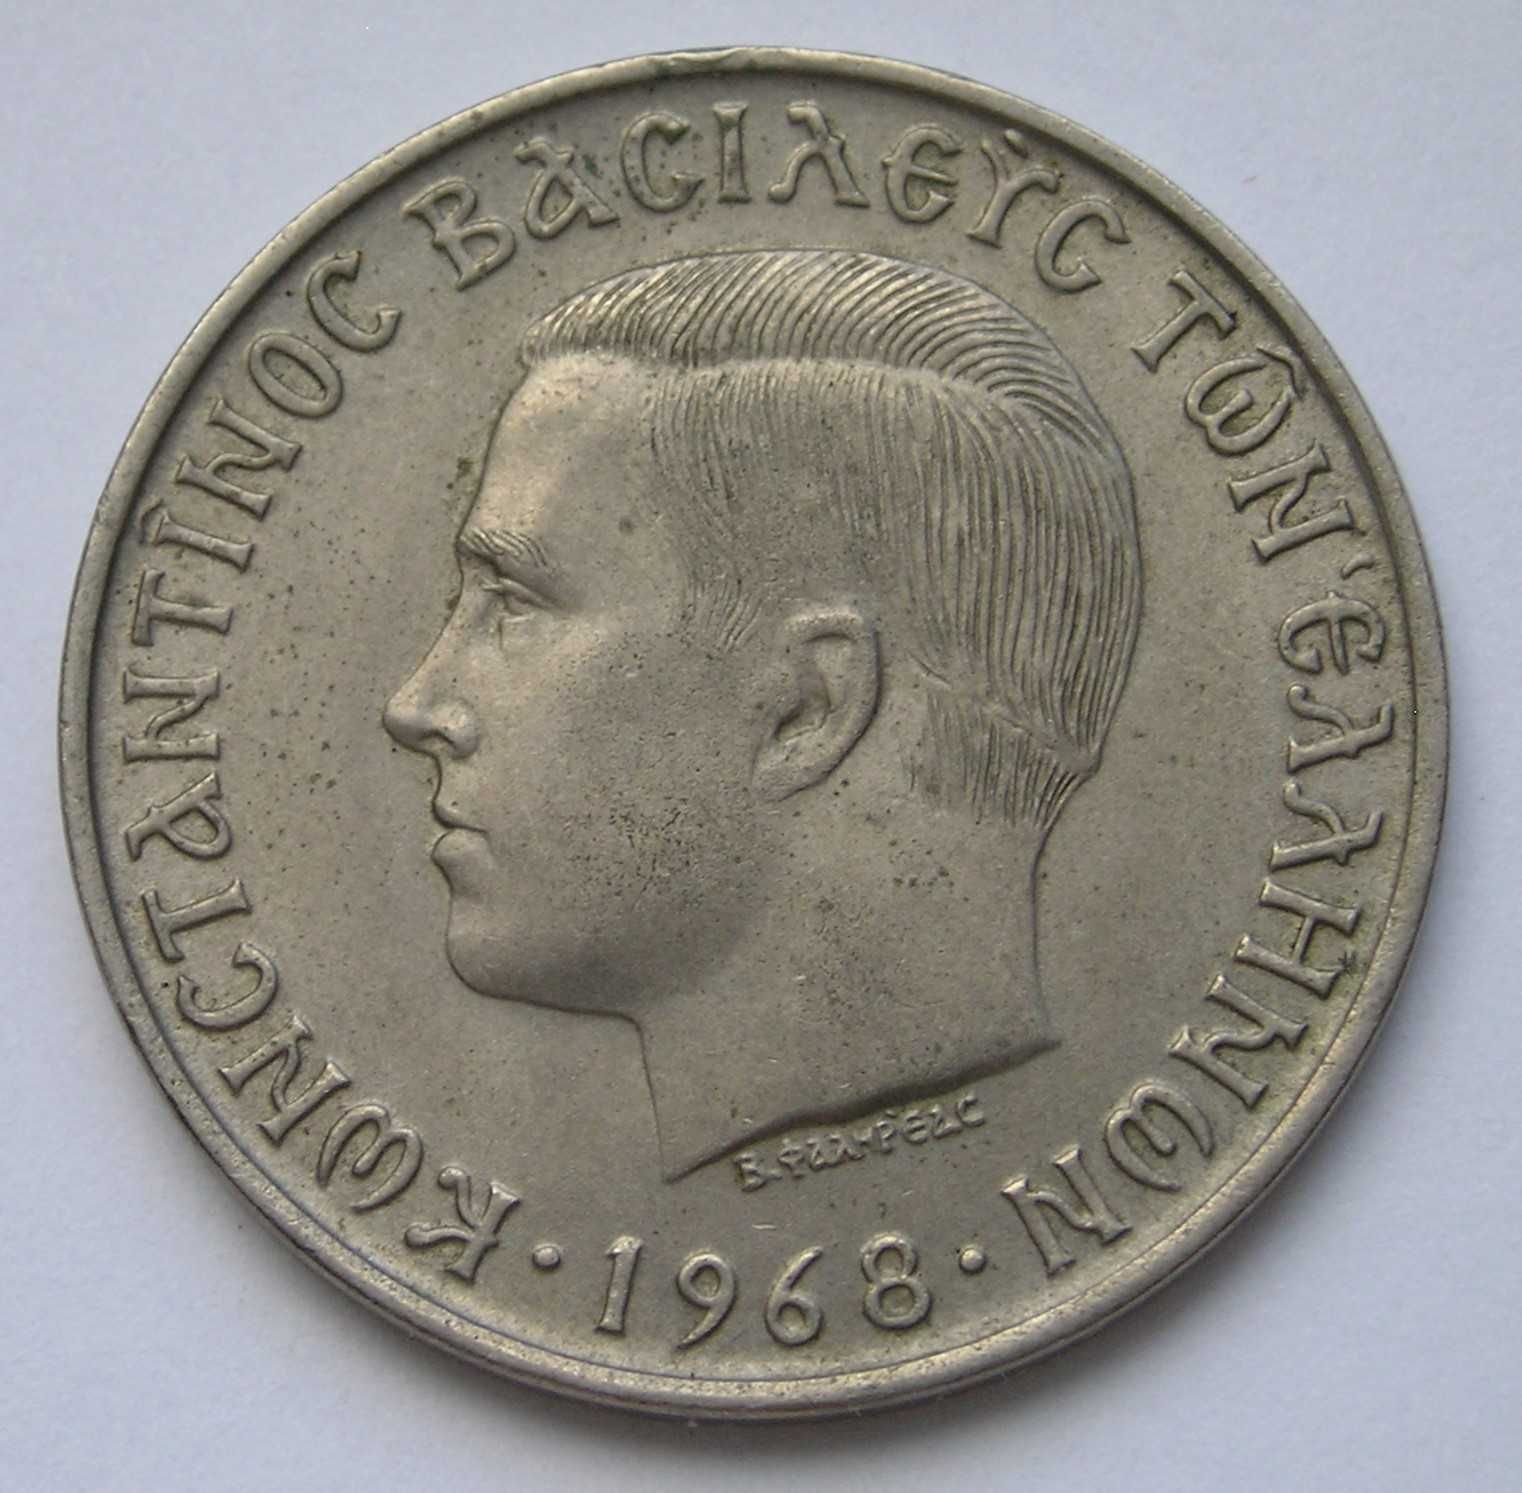 Grecja 10 drachm 1968 - król Konstantyn - stan 2